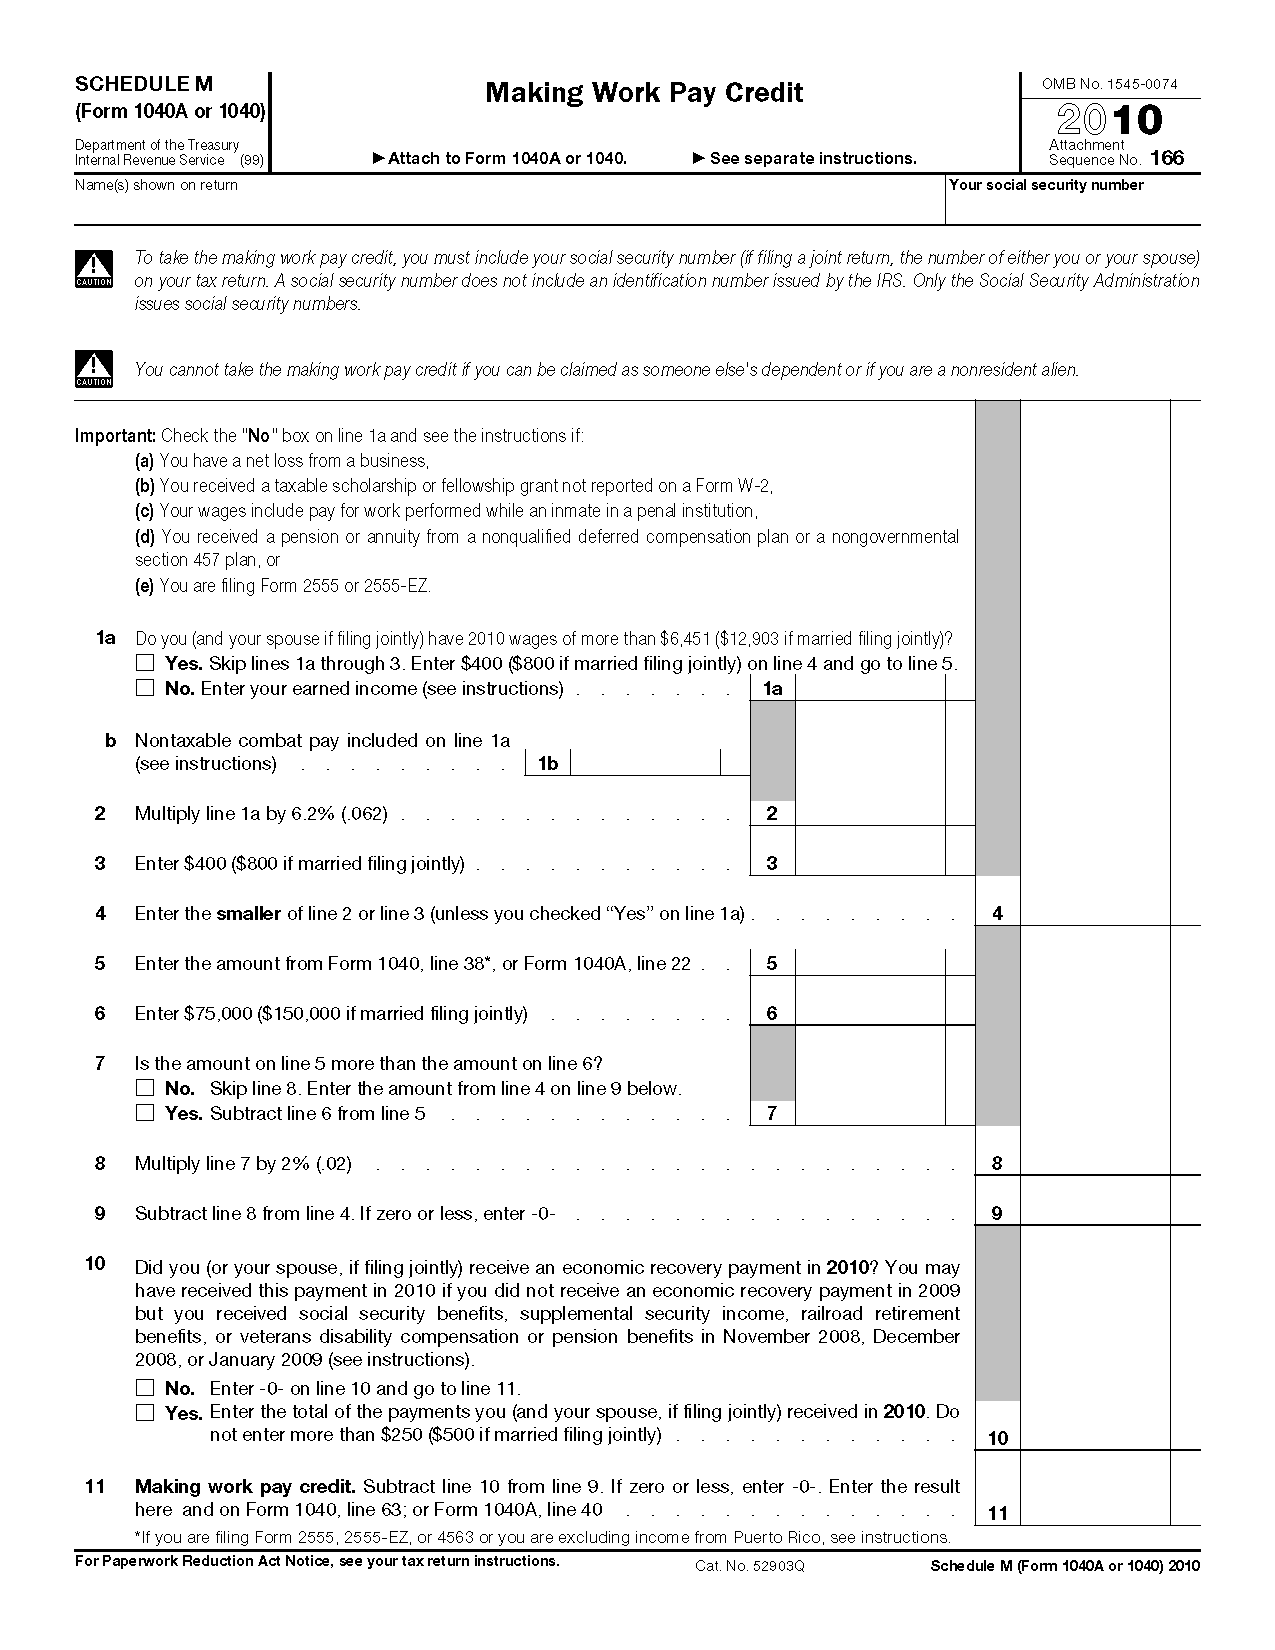 2014 IRS Tax Forms 1040 Printable Image